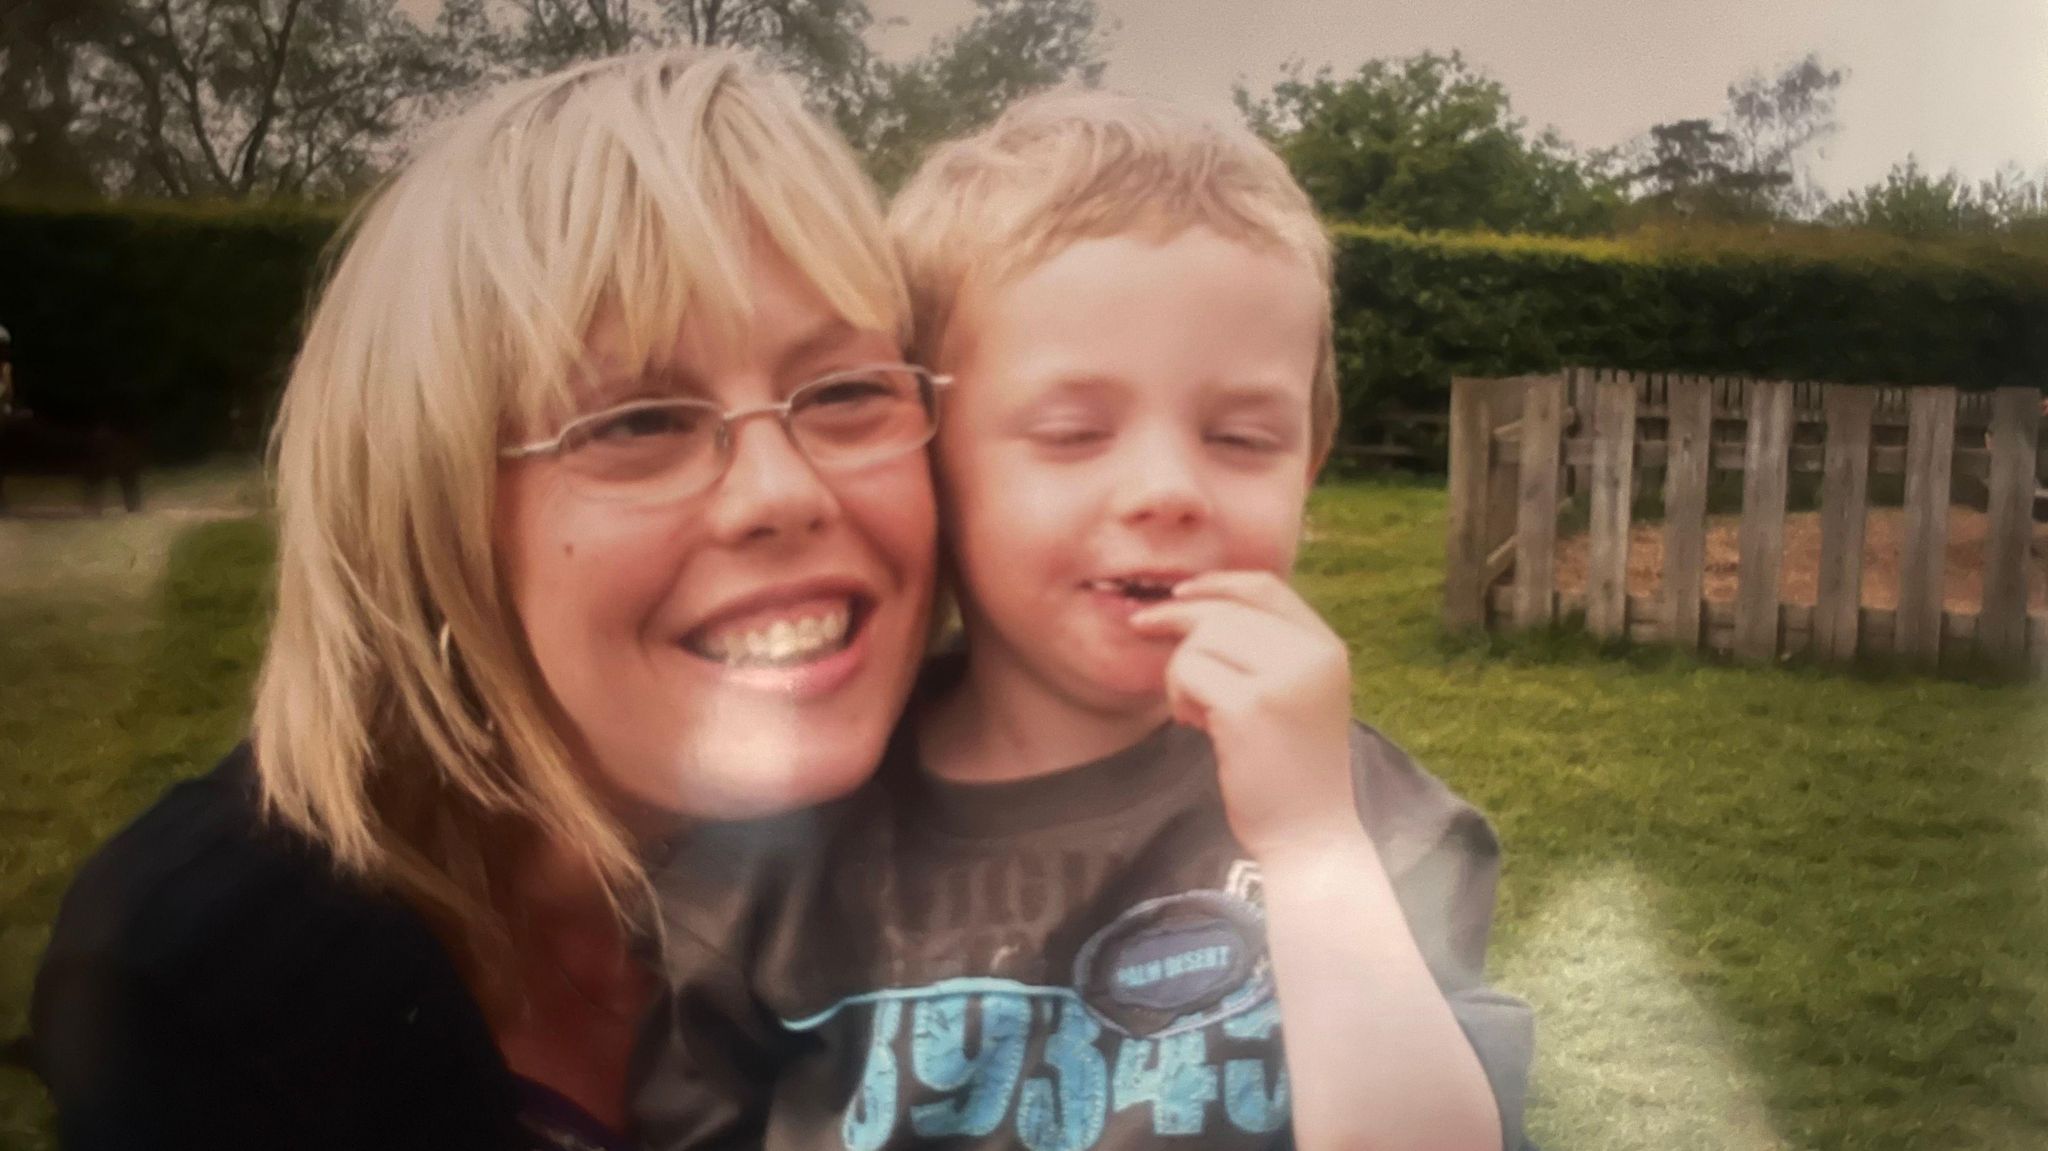 Karen Watts, who has shoulder-length fair hair and glasses, smiles as she cuddles her son, Alfie 